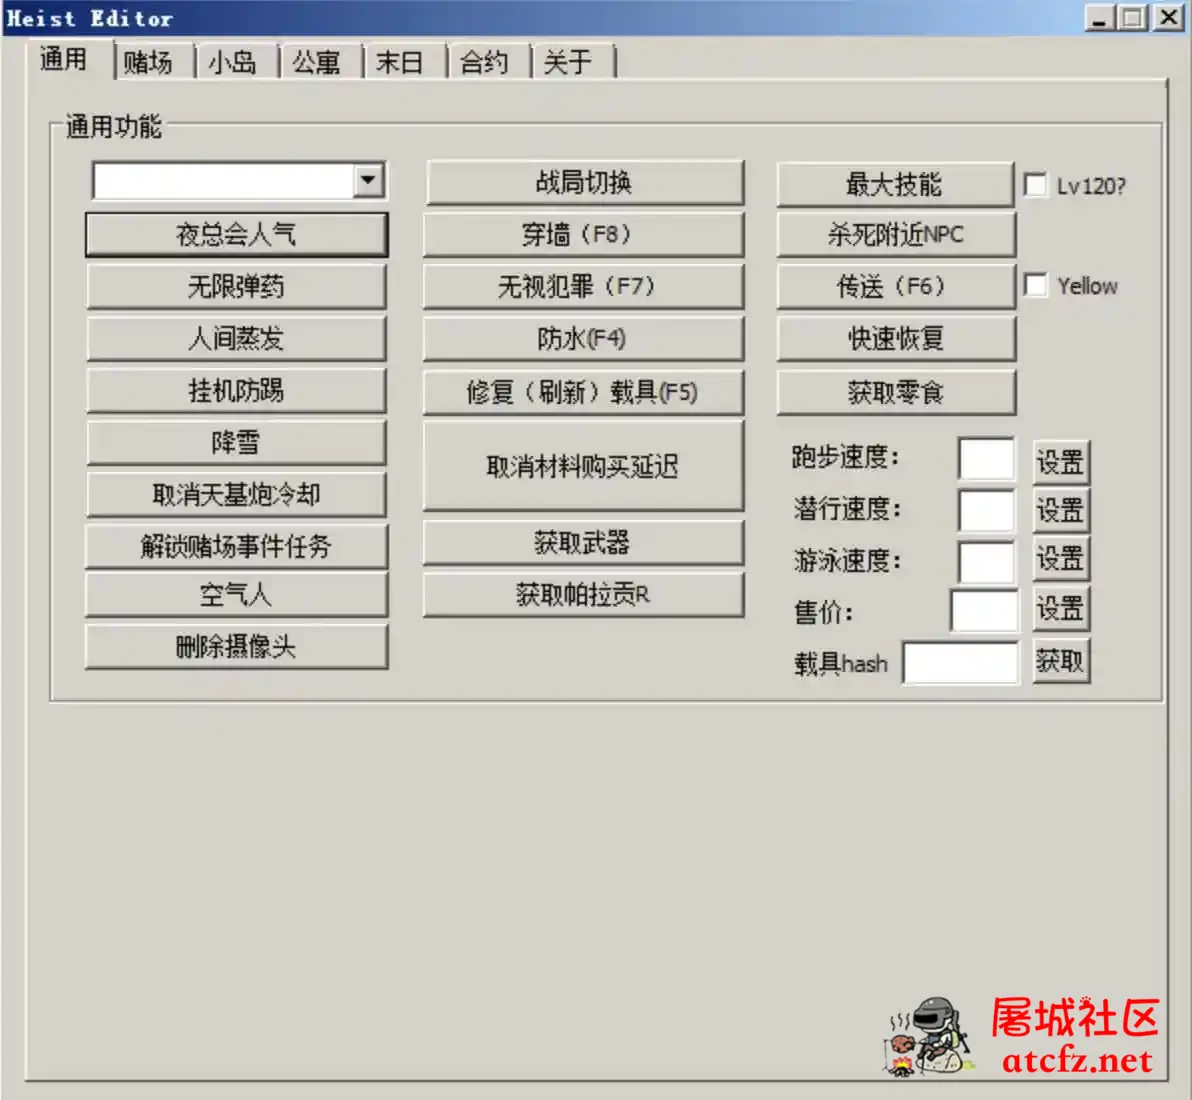 GTA5 Heist Editor外部抢劫编辑器 v3.5.7 屠城辅助网www.tcfz1.com1947